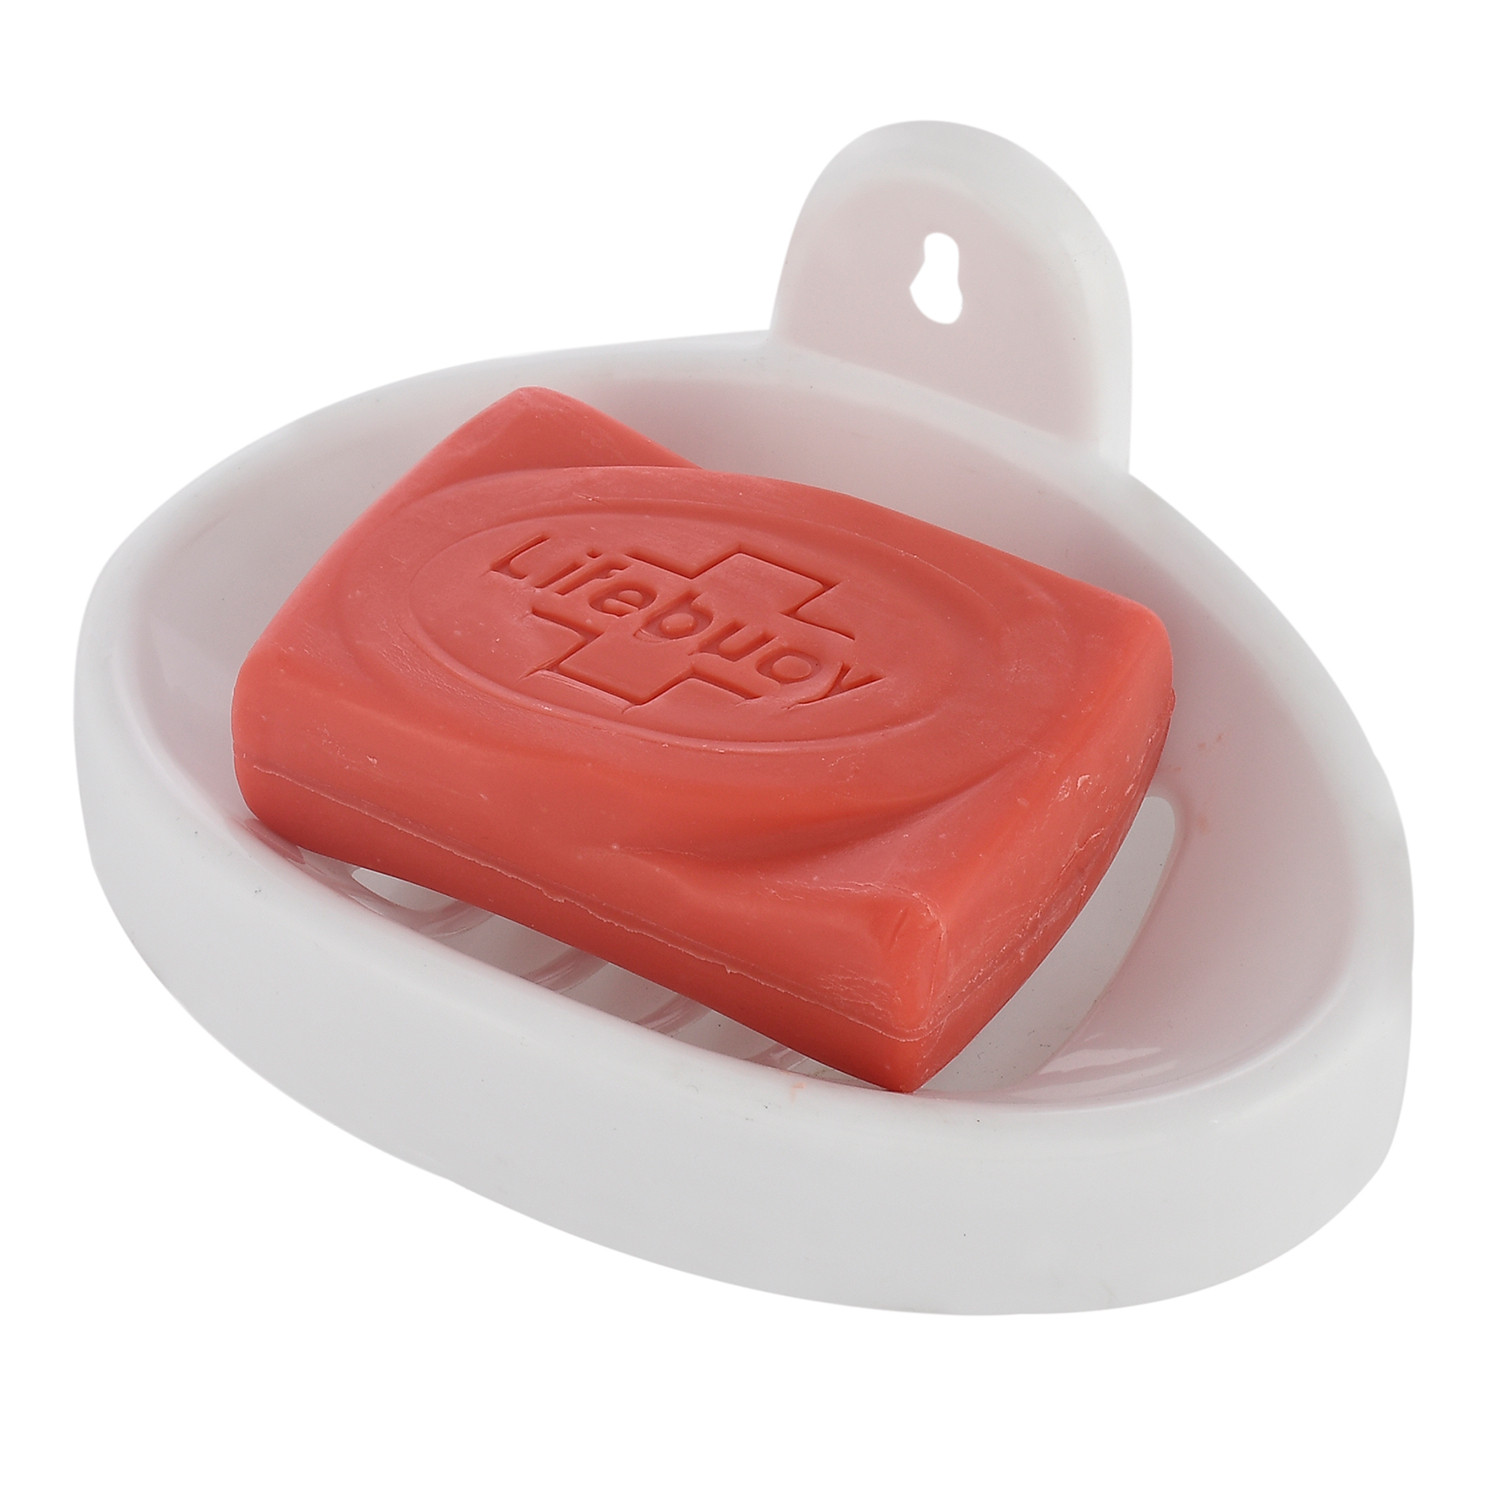 Kuber Industries Soap Holder|Sink Soap Holder|Plastic wall Mounted Soap Holder|Oval Shape Self Draining Soap Dish for Bathroom| (White)